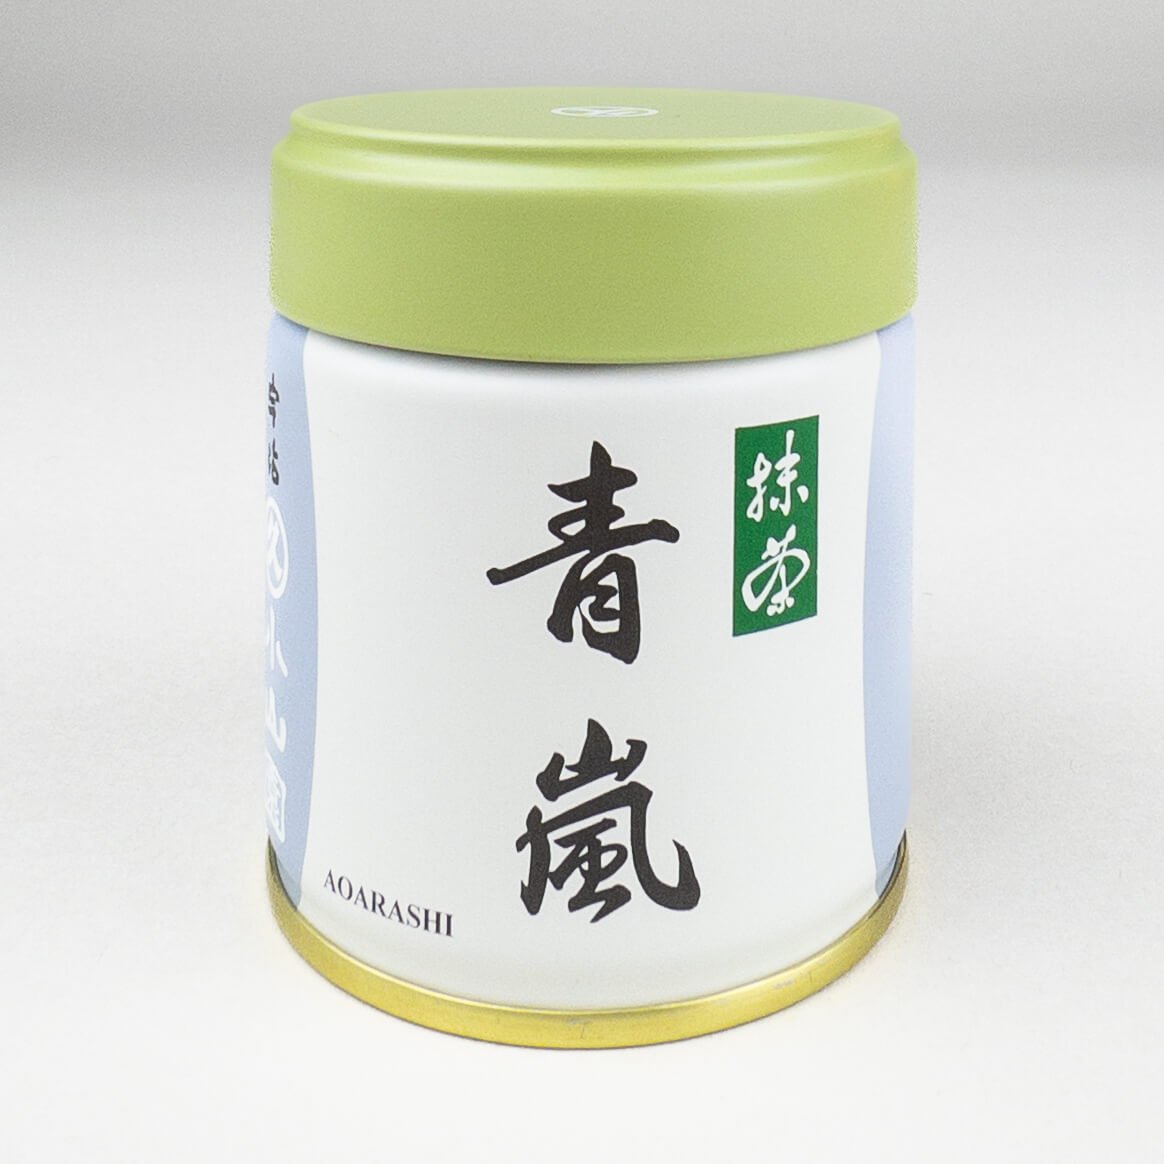 Aoarashi Matcha by Marukyu Koyamaen (40 gram or 100 gram tins)